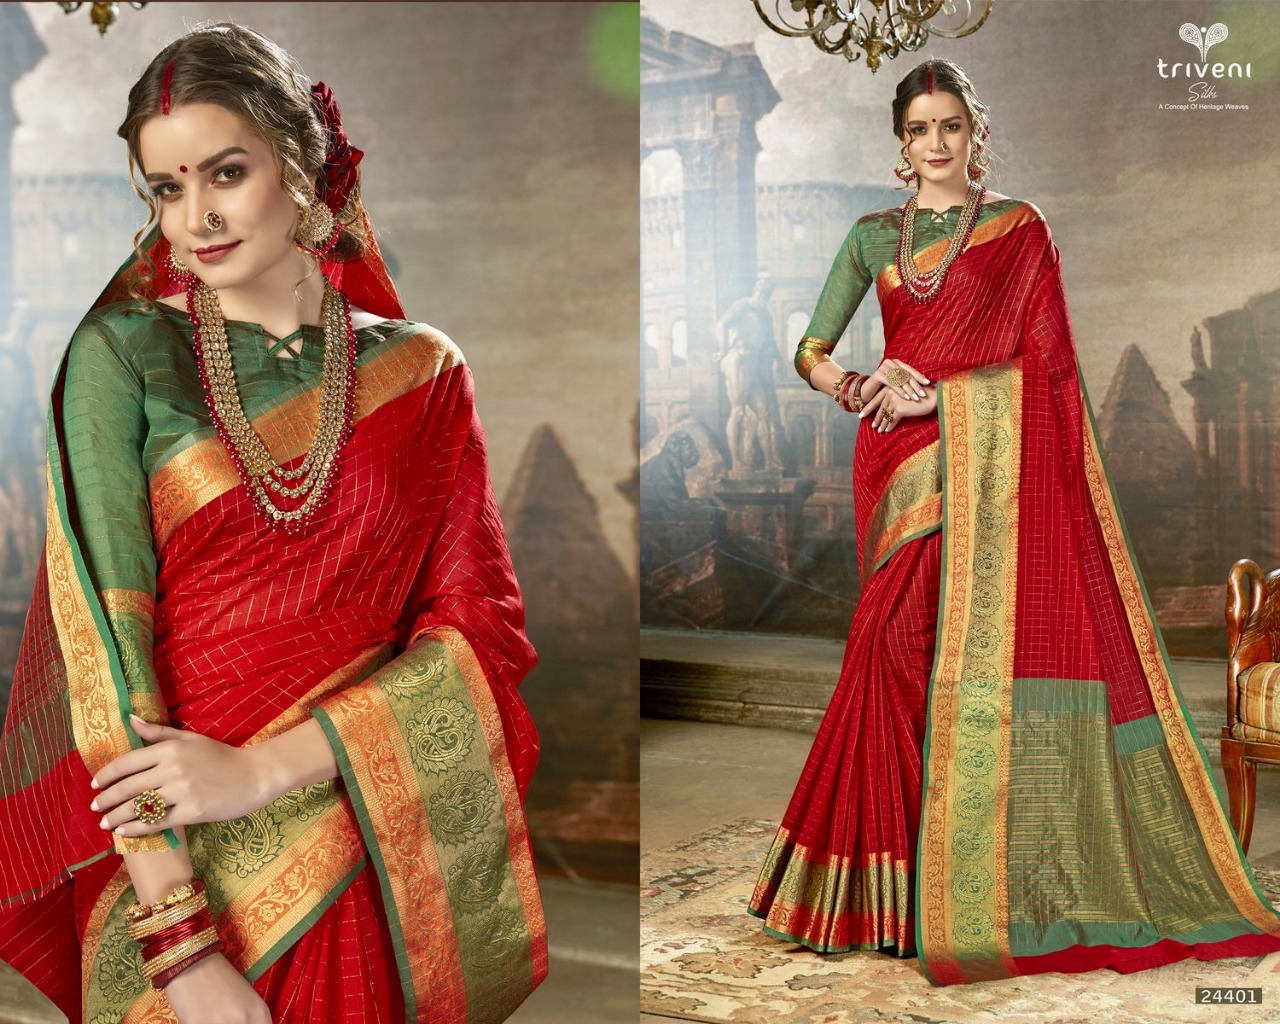 Triveni Sasya fancy colourfull sarees collection at wholesale rate